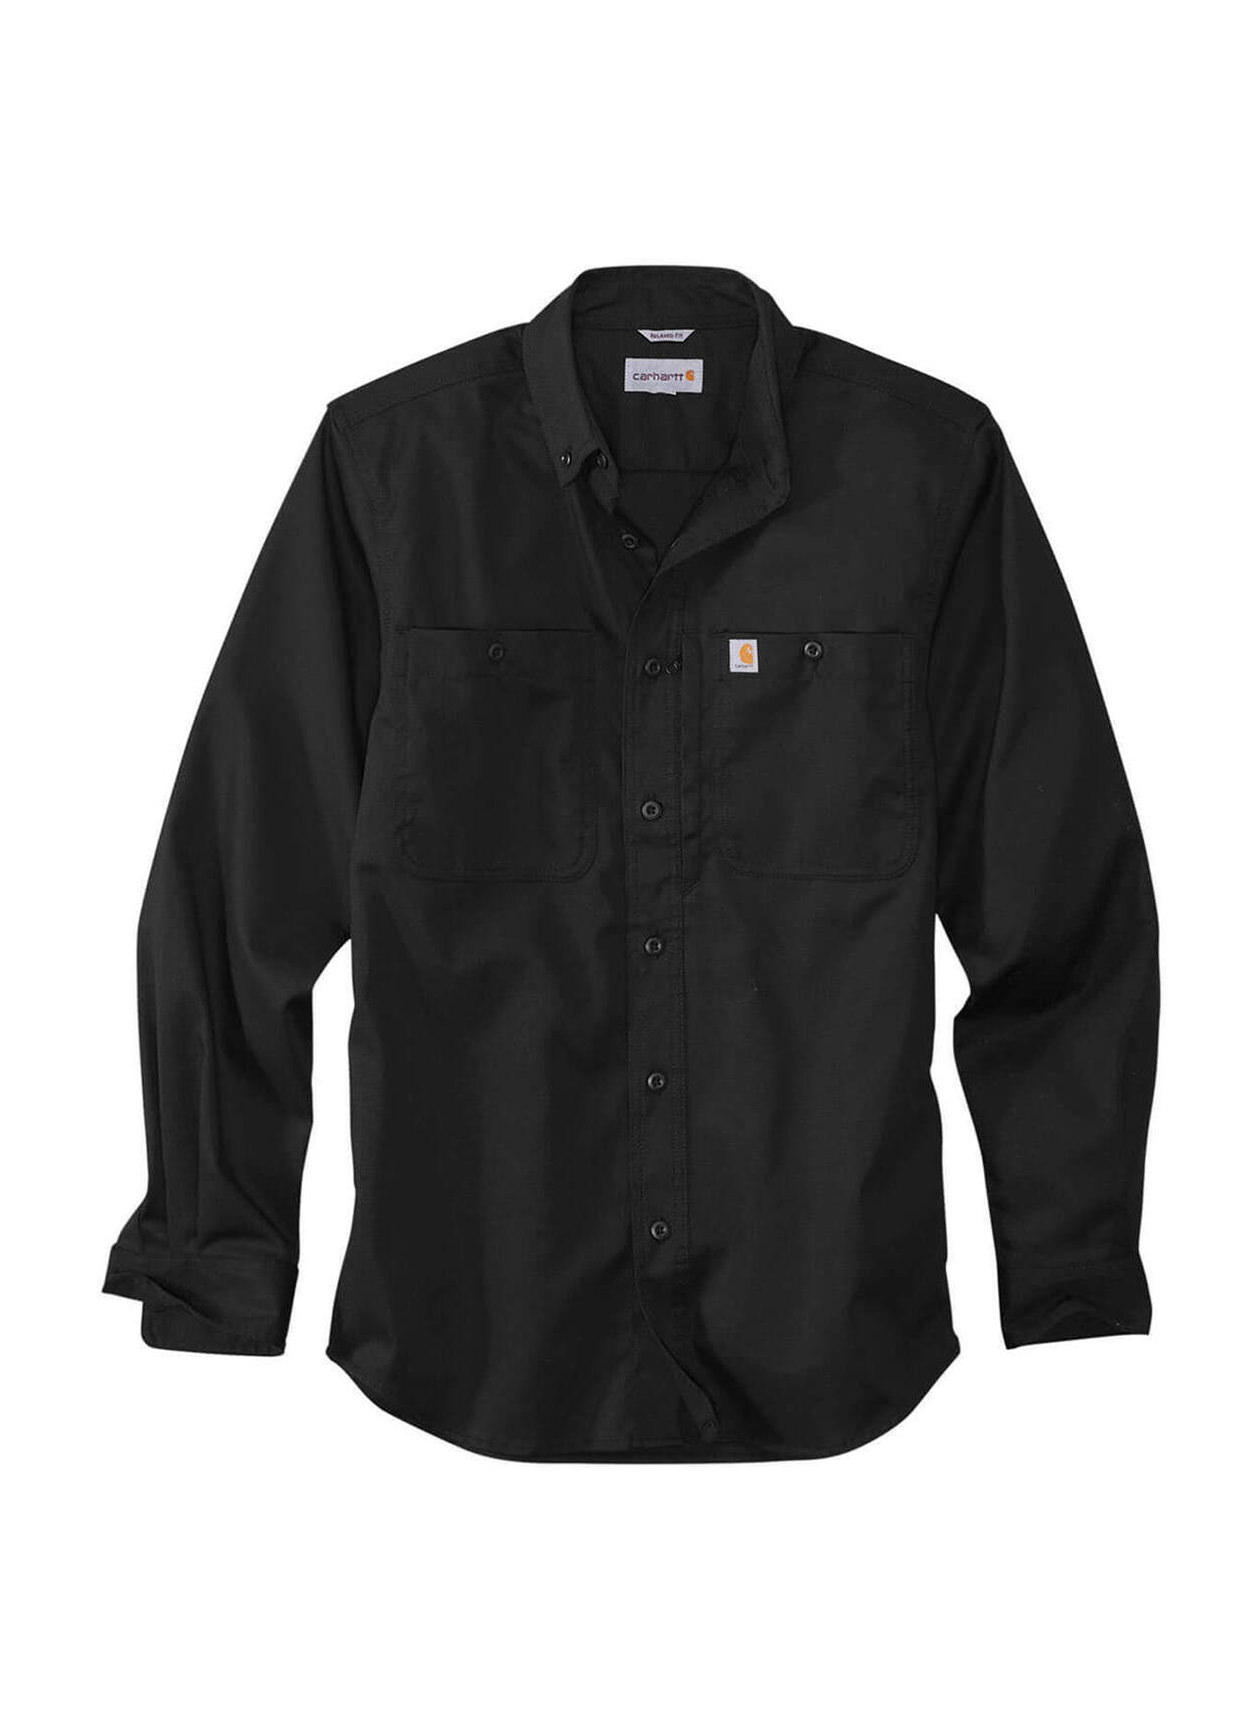 Carhartt Men's Rugged Professional Series Long-Sleeve Shirt